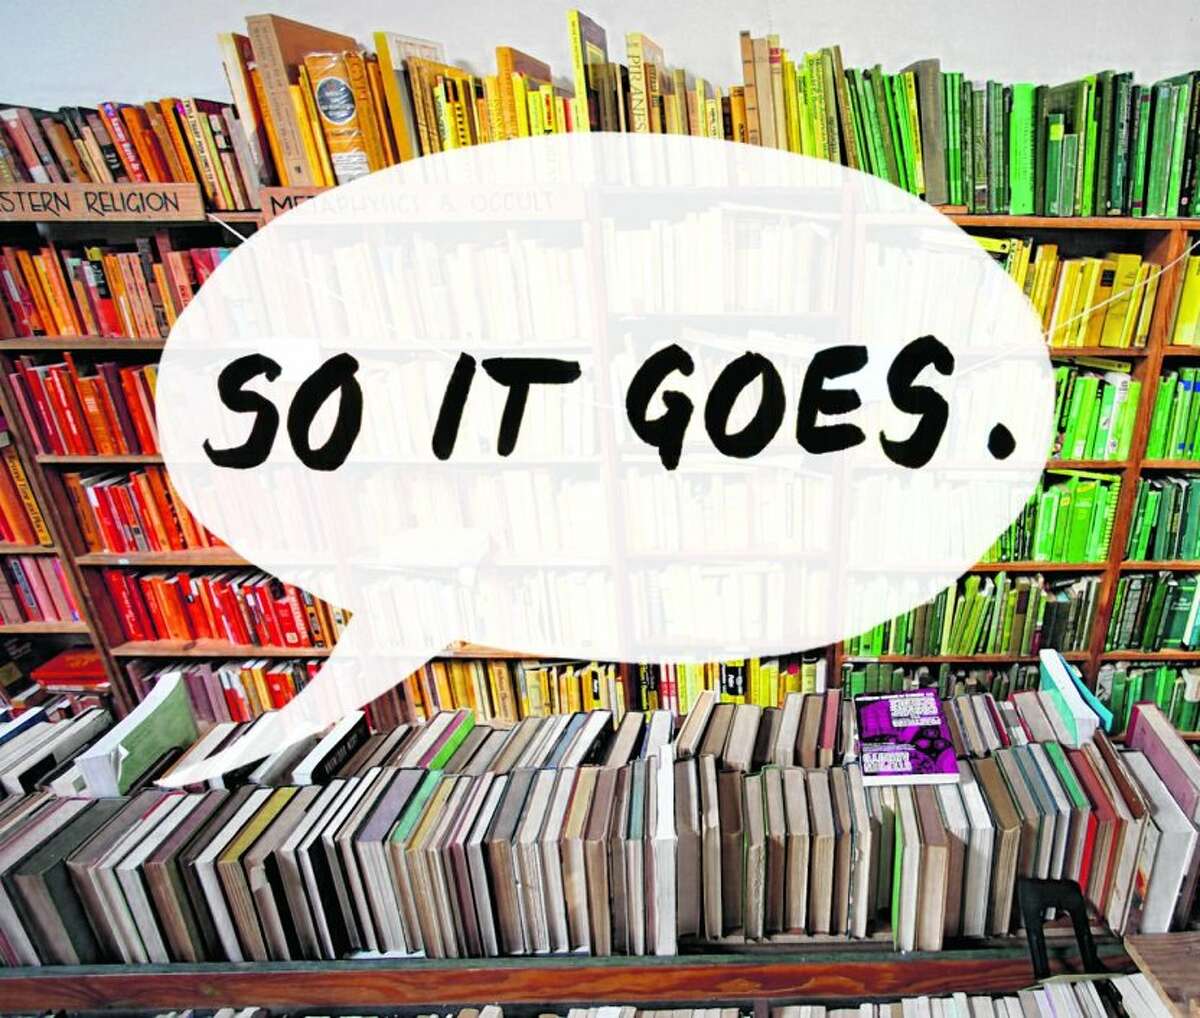 Chris Cobb, an artist, rearranged Adobe Bookshop's 20,000 books by color.